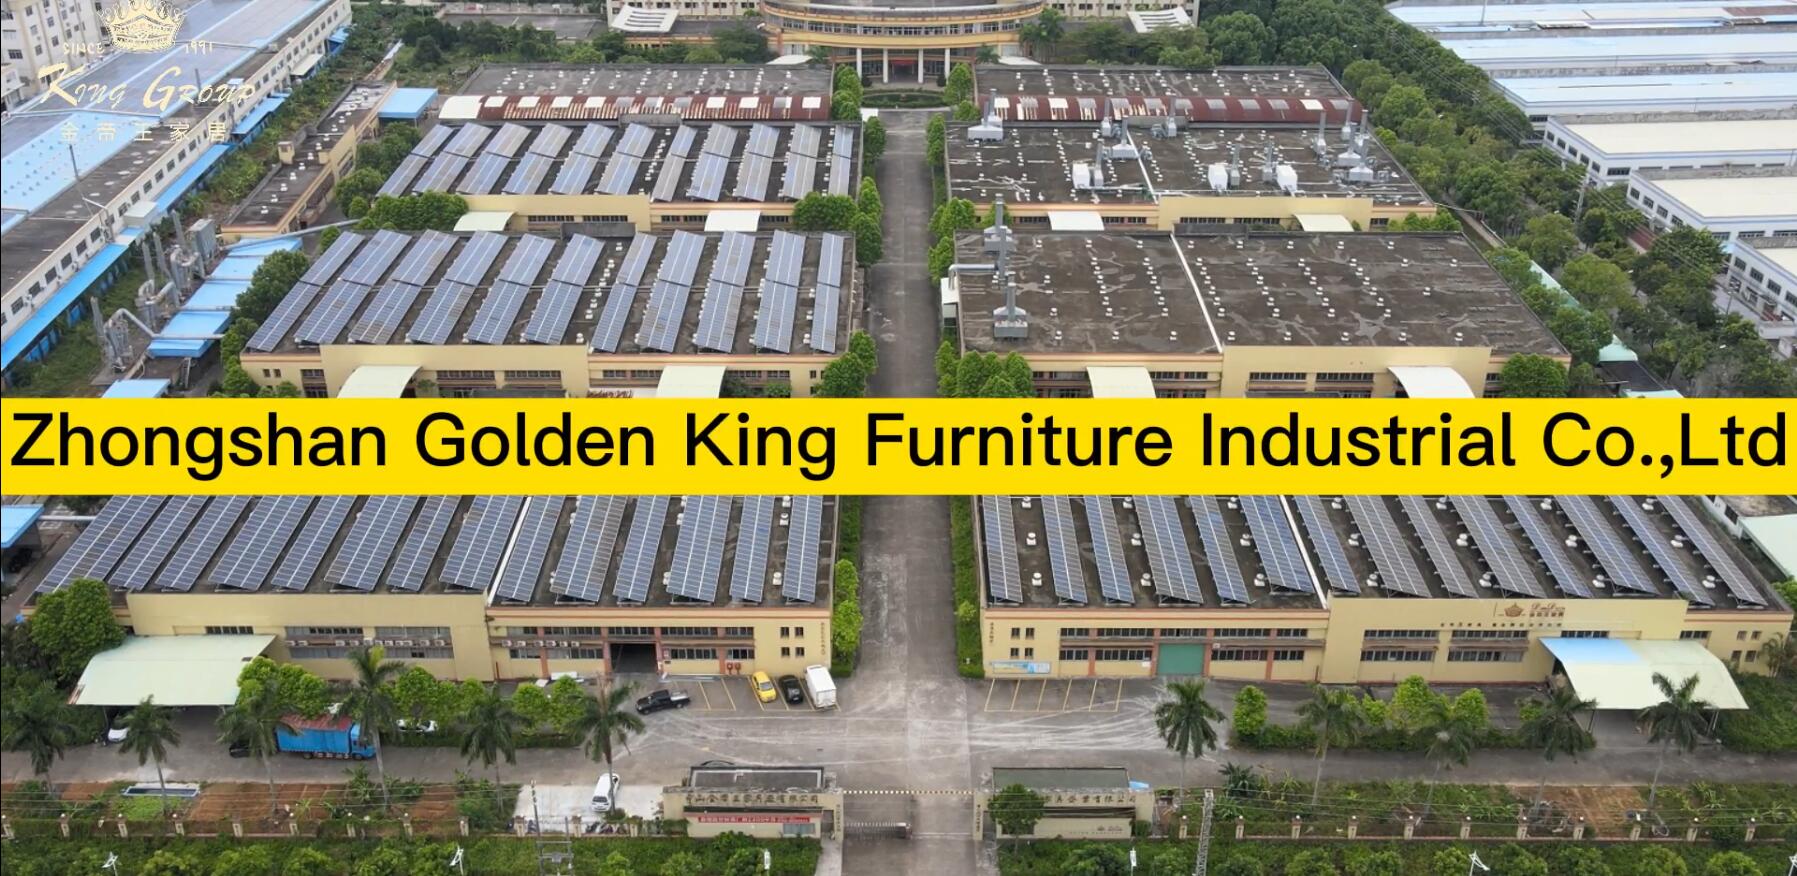 Zhongshan Golden King Furniture Industrial Co.,Ltd,